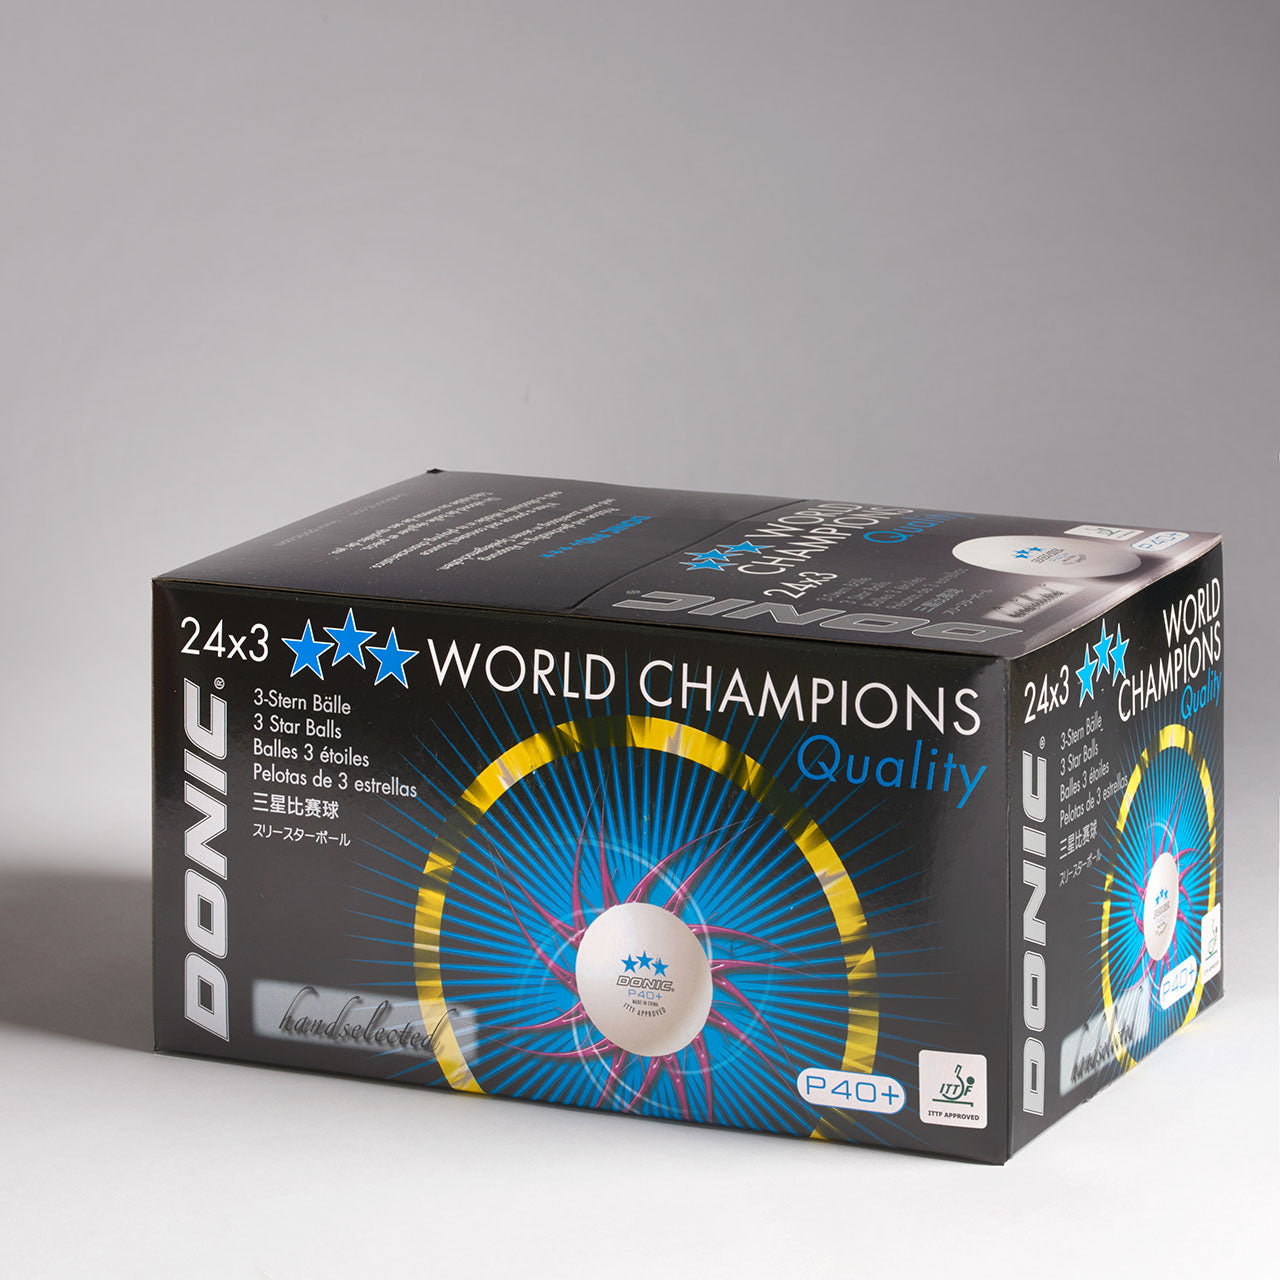 Donic World Champion ITTF Approved 3 Star P40+ Ball Newgy